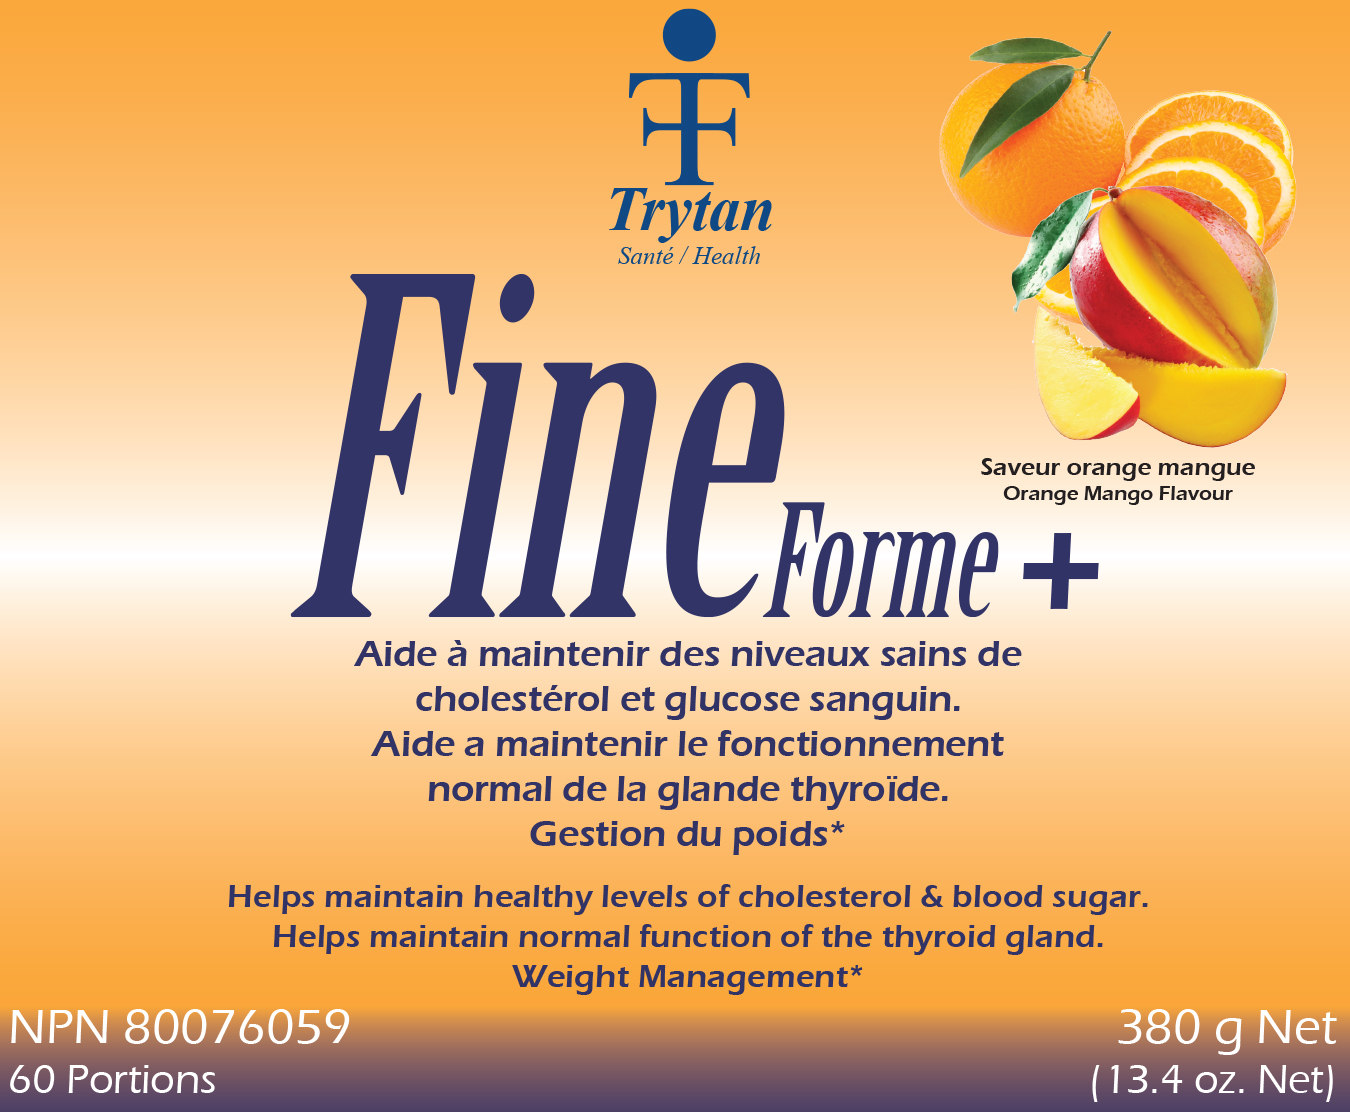 FineForme